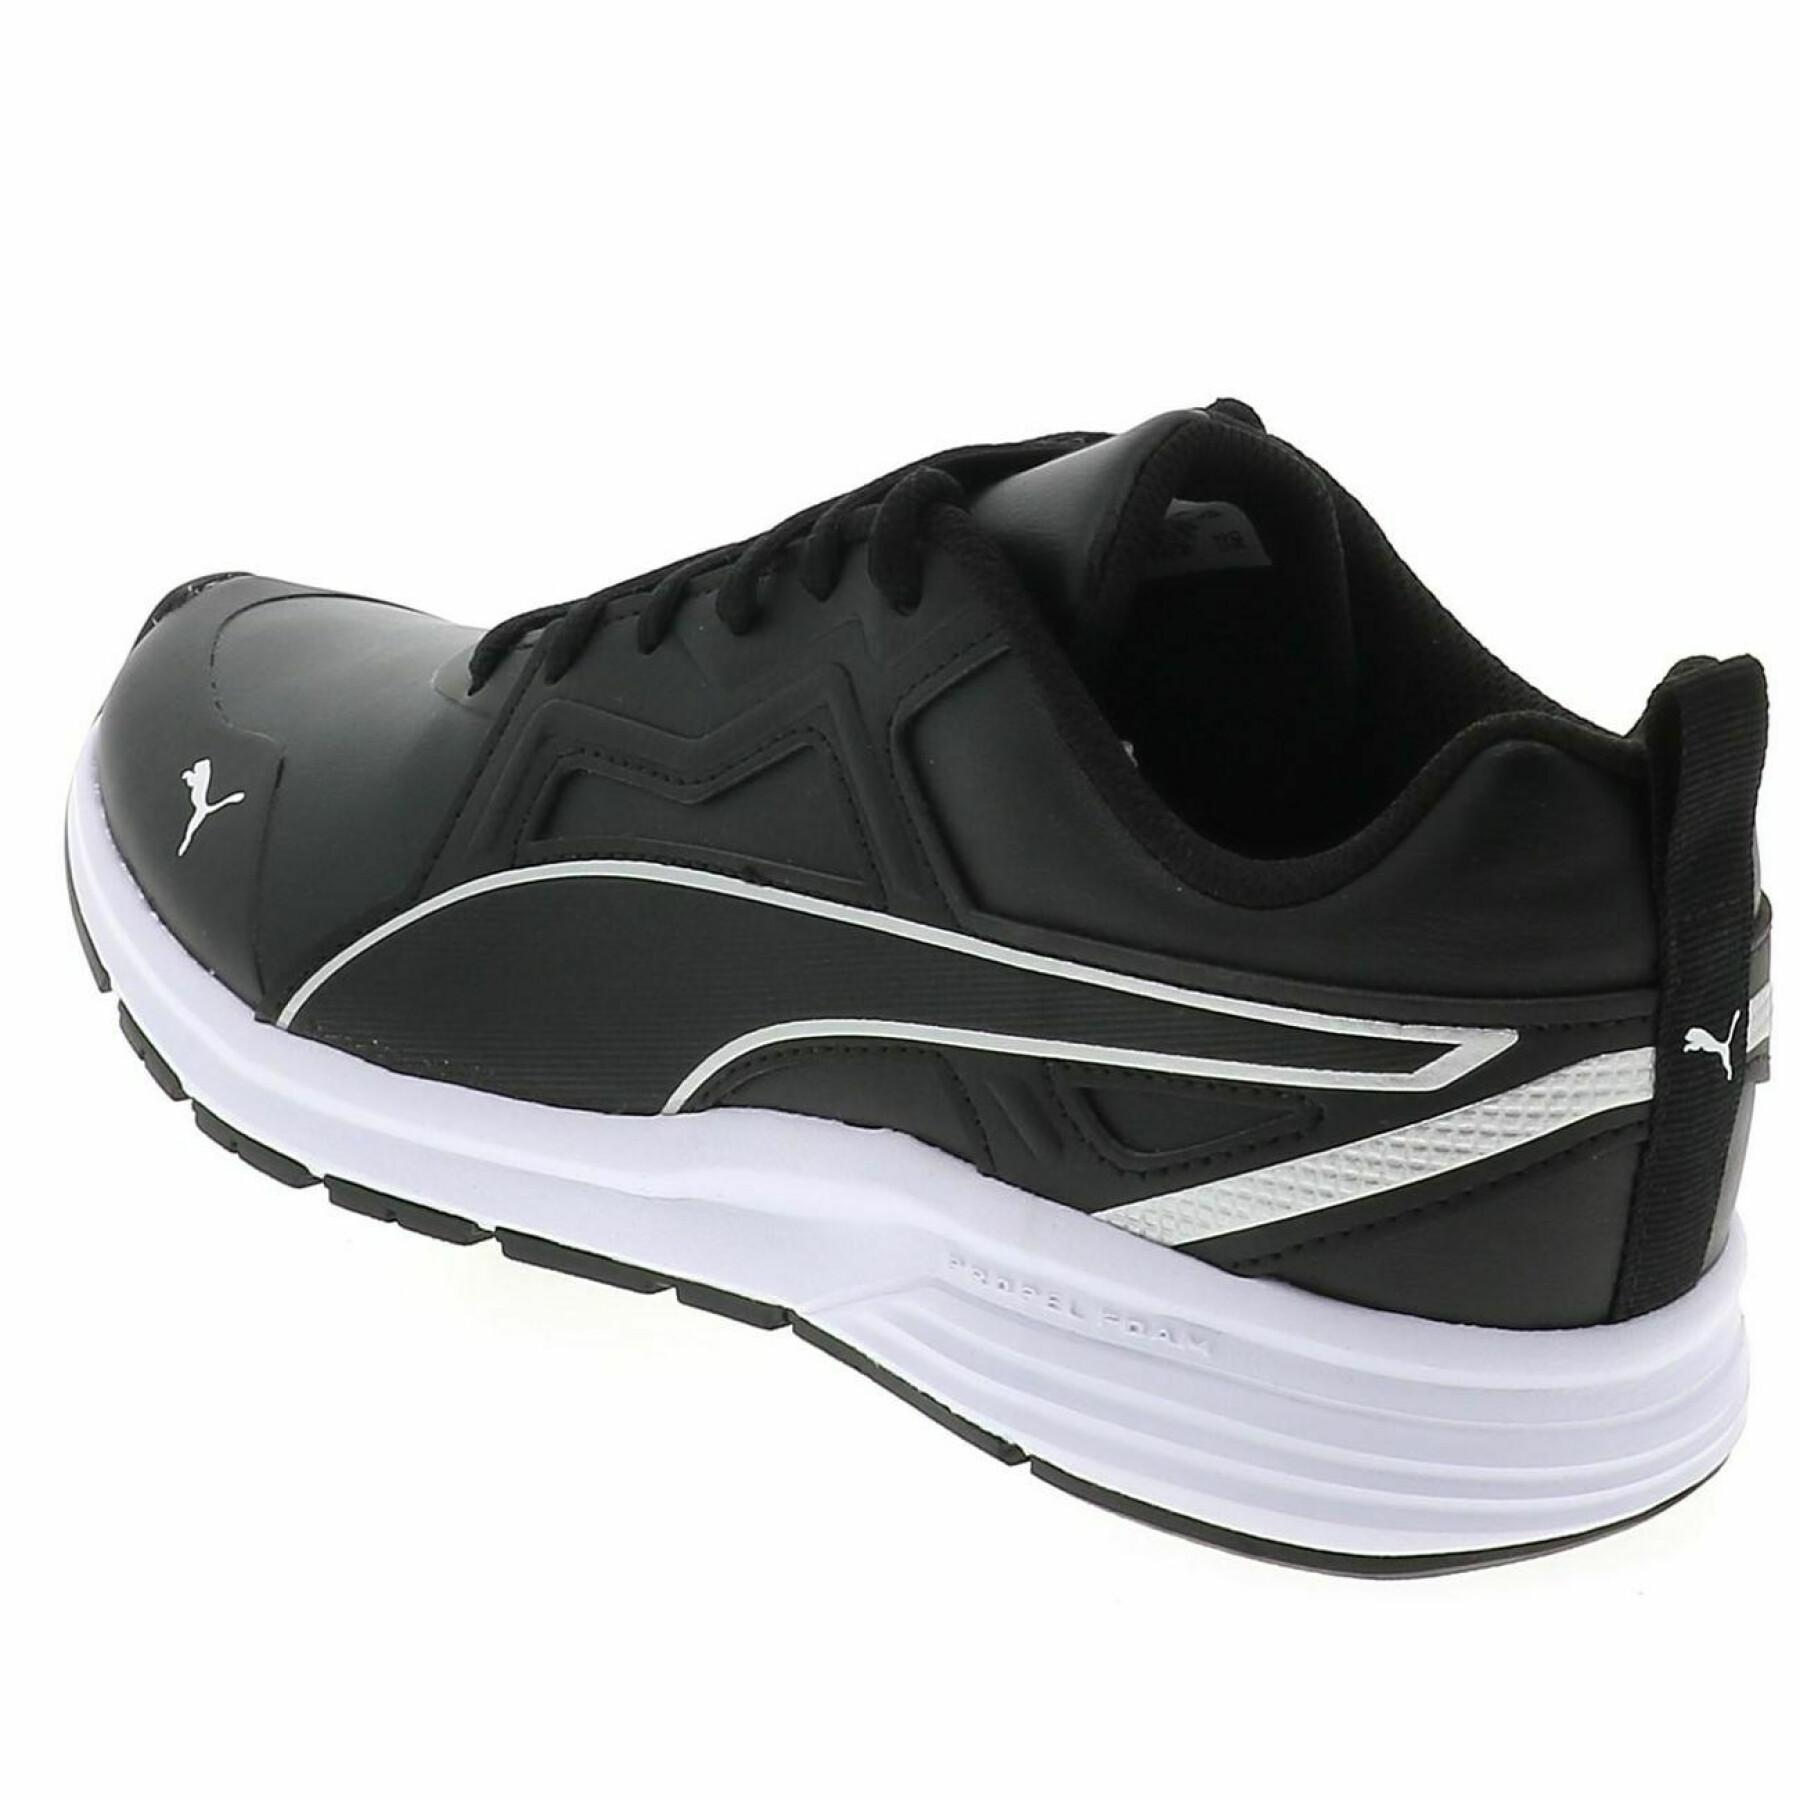 Zapatos Puma Pure jogger